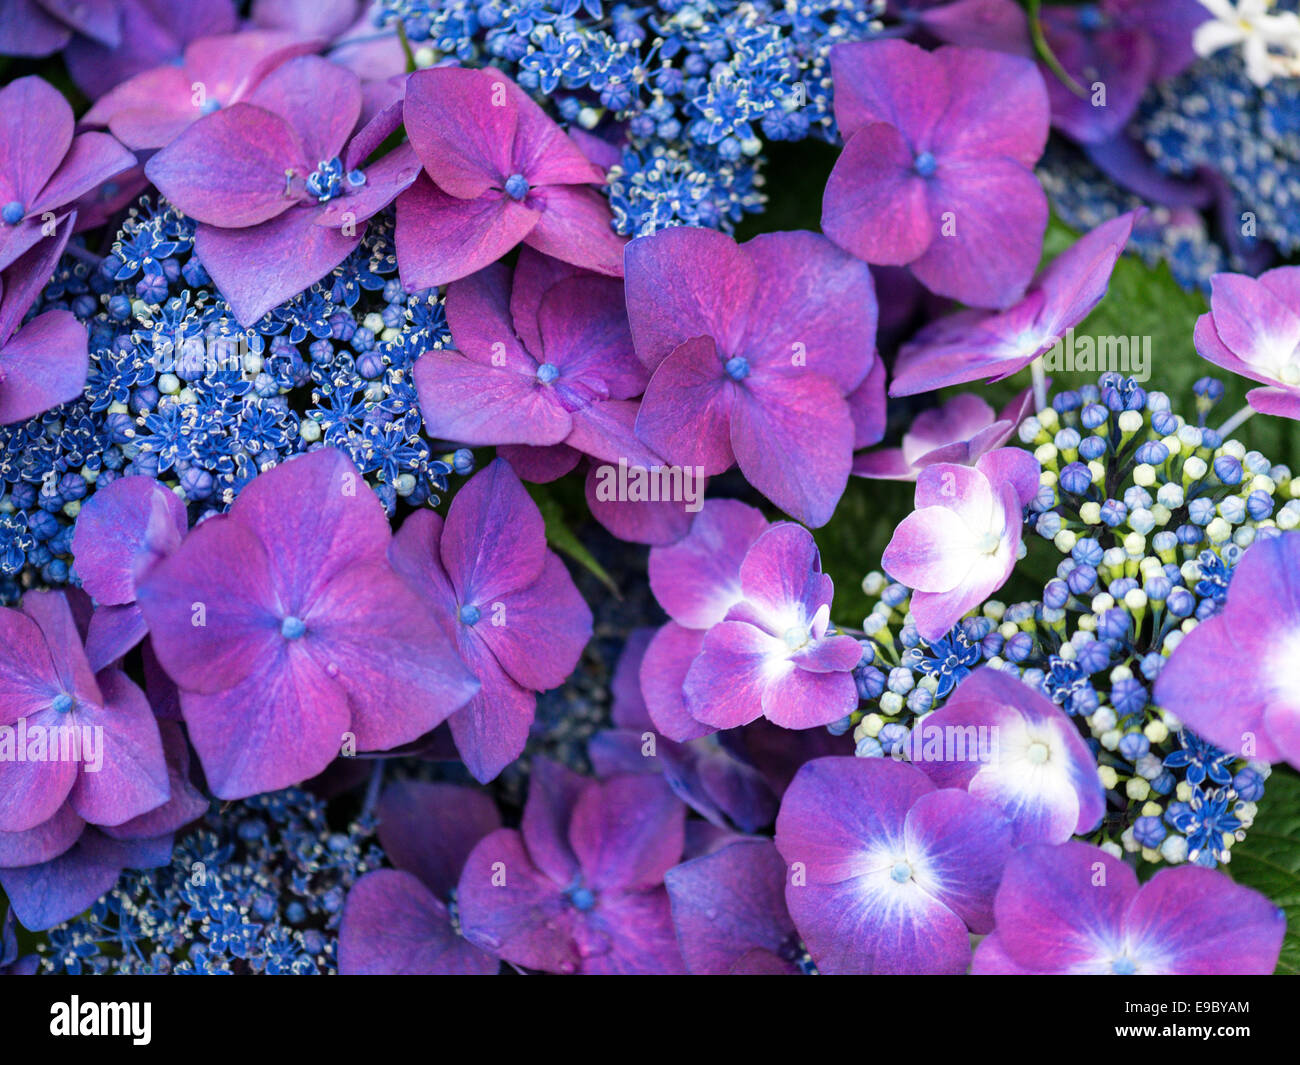 Stunning Mixed display, purple Streptocarpus with mixed blue varietal and green foliage. Stock Photo